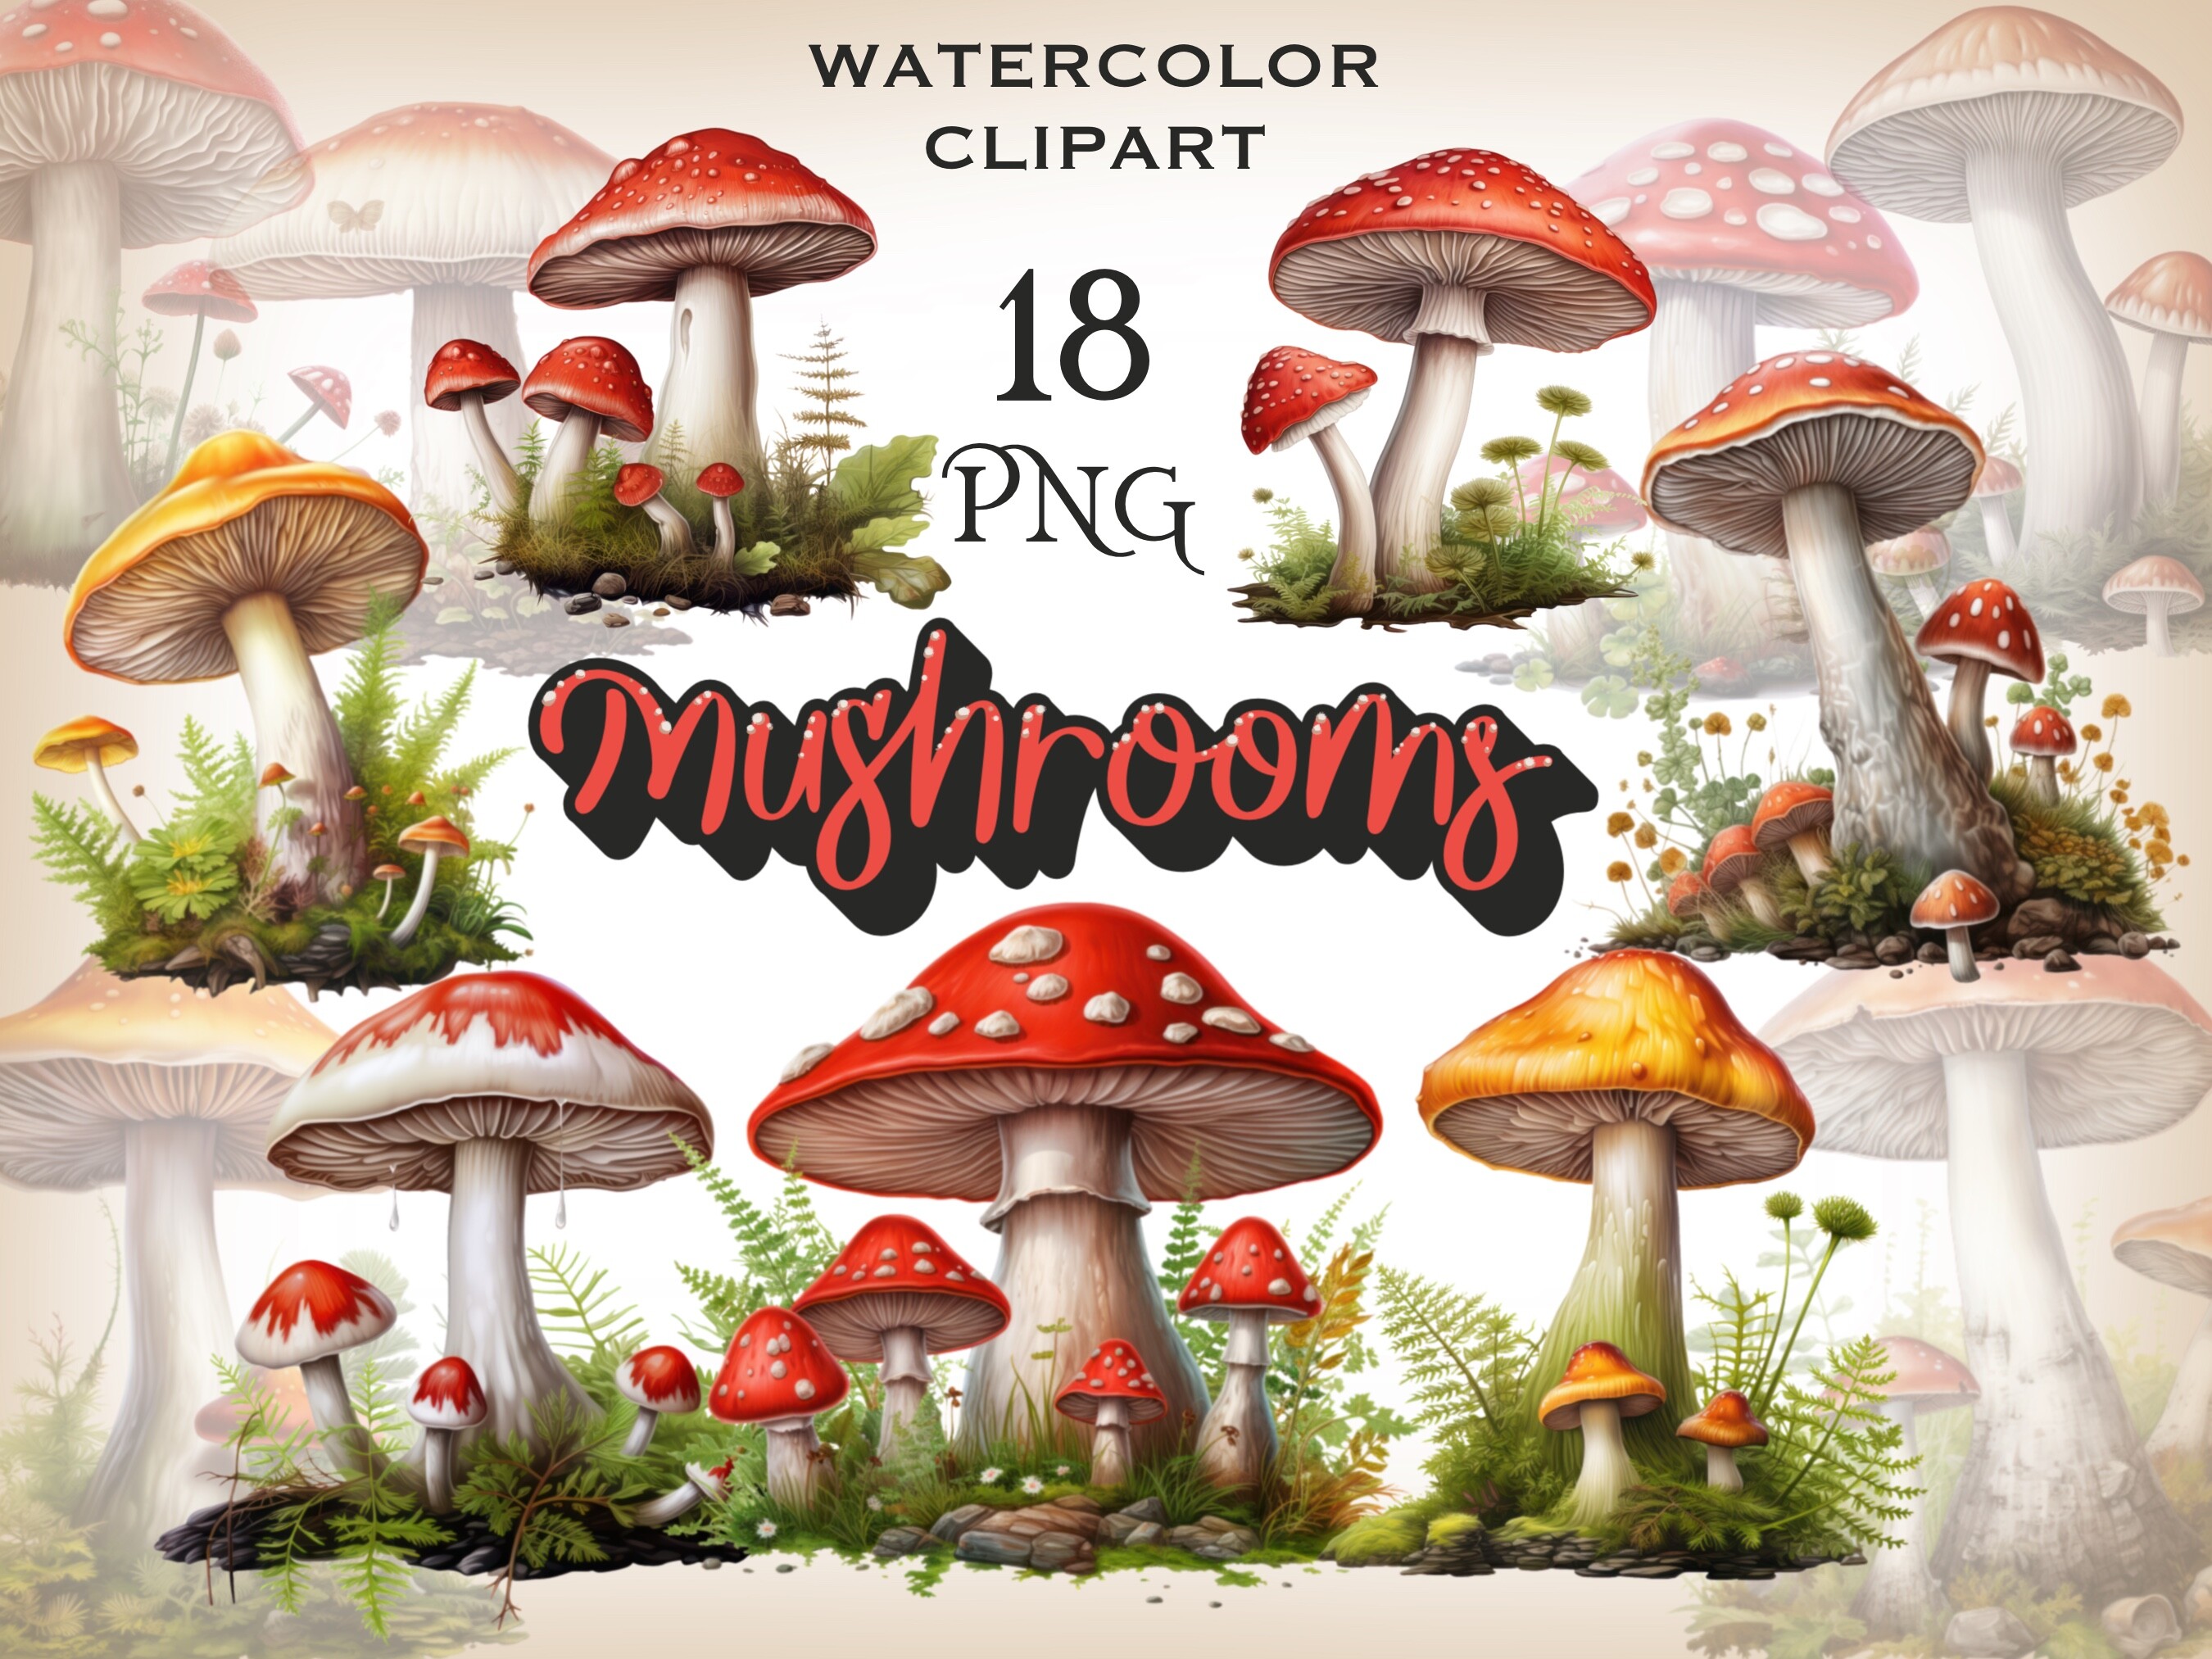 Mushrooms Watercolor Clipart Graphic by FantasyDreamWorld · Creative ...